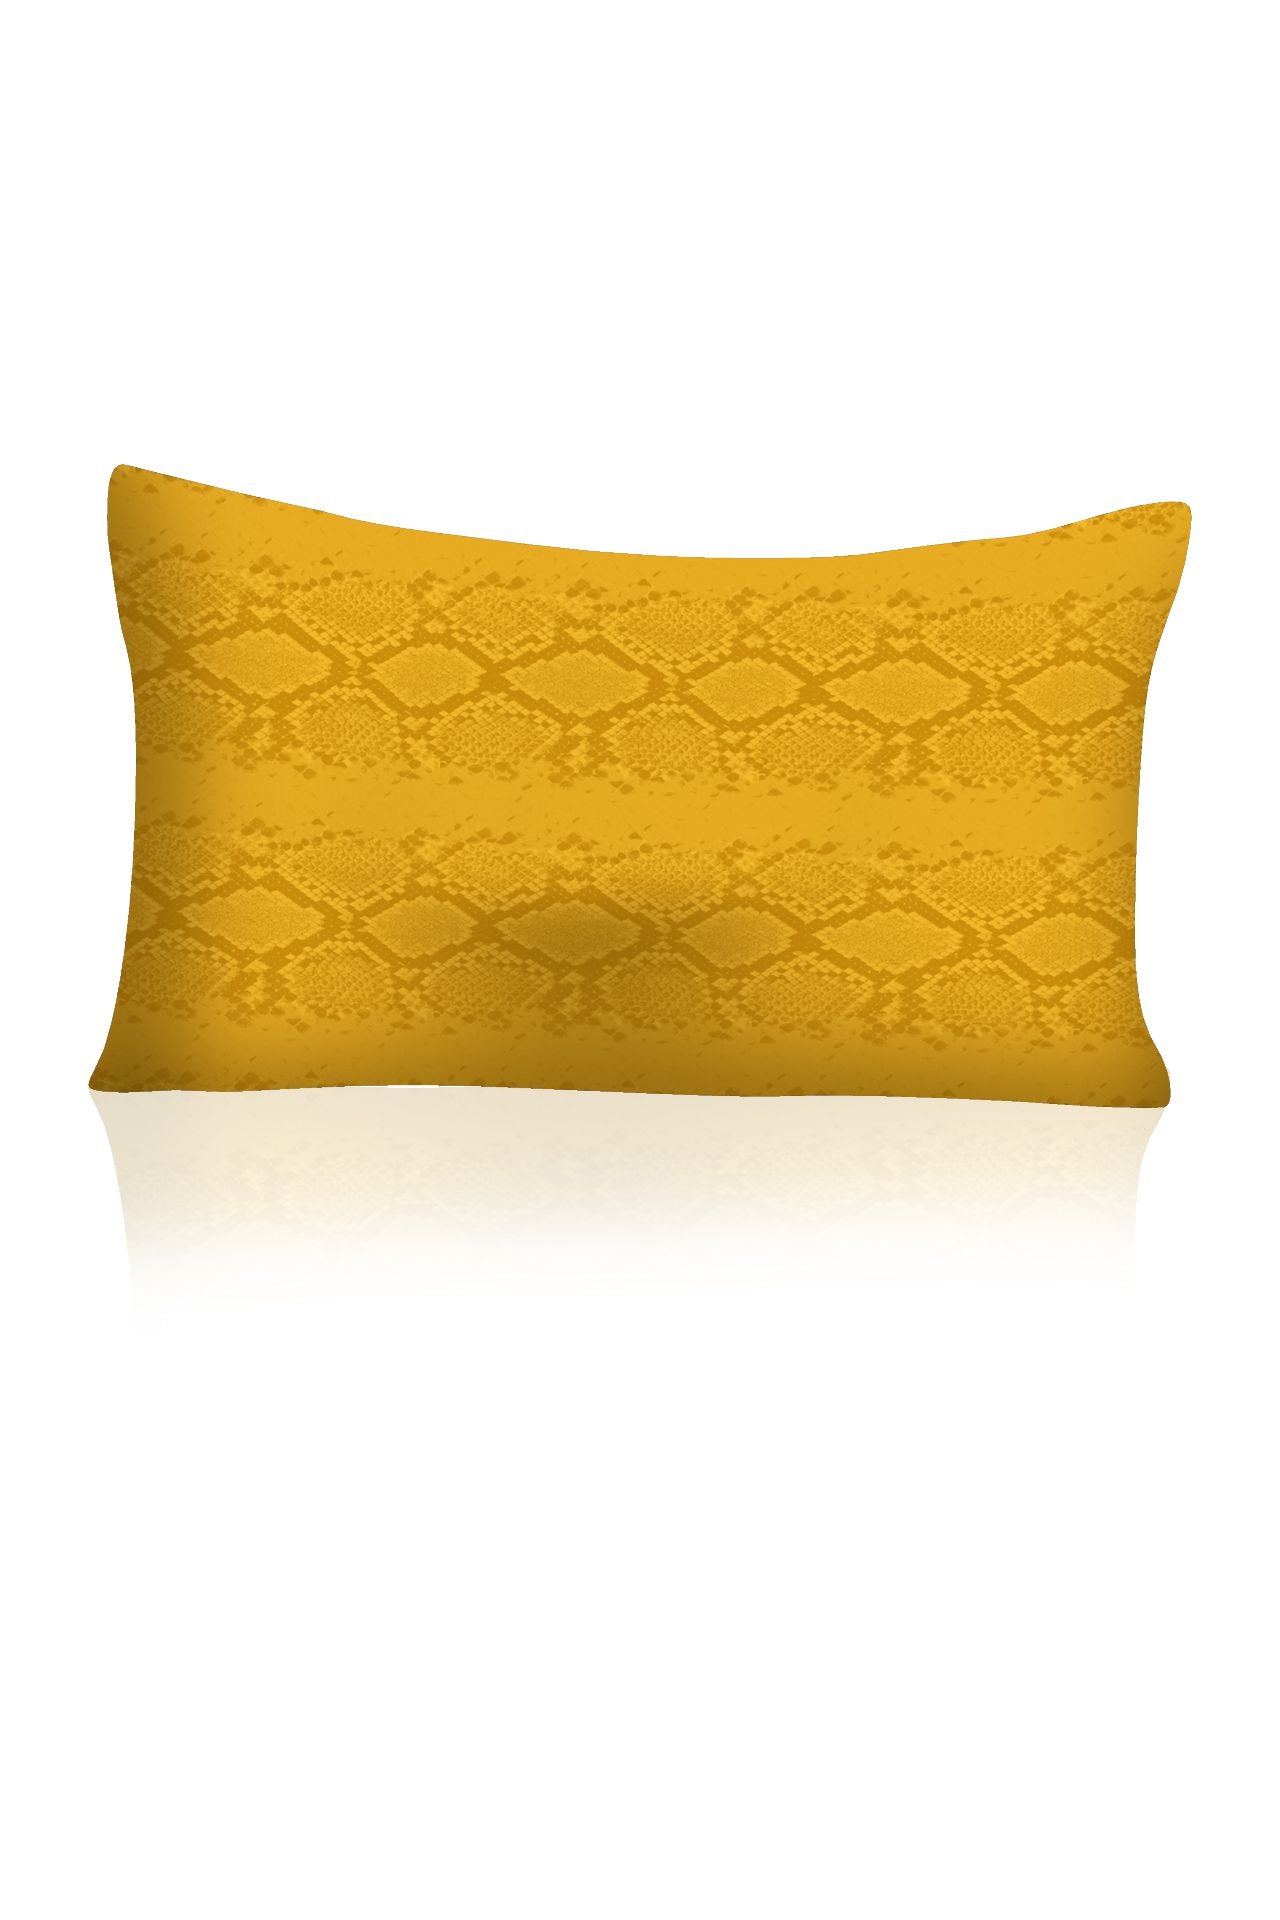 Solid Yellow Pillow Cover Vegan Silk